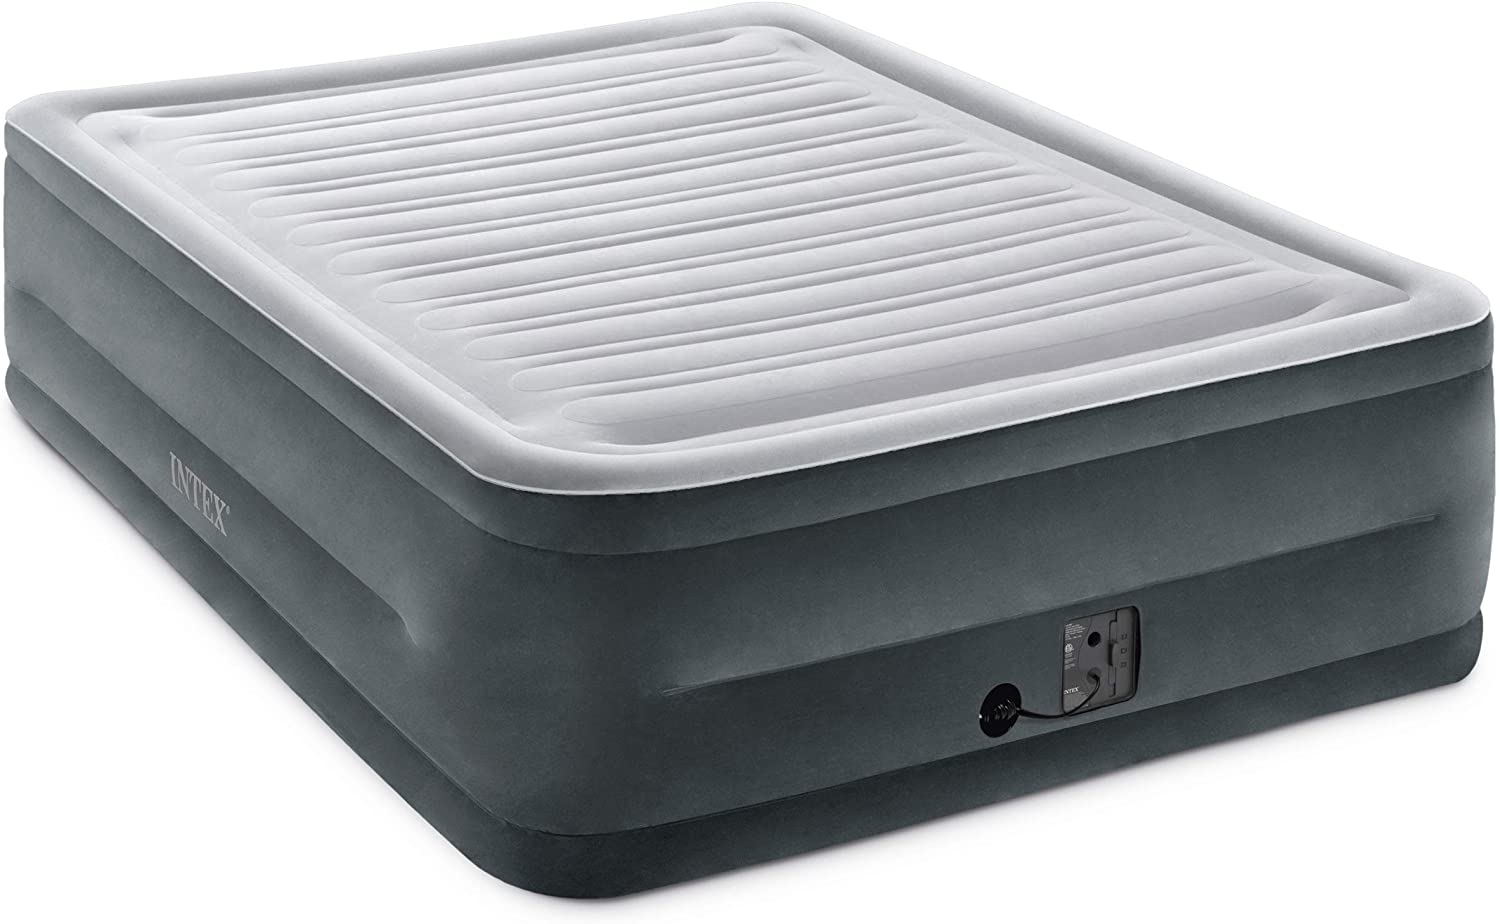 weight capacity of air mattress